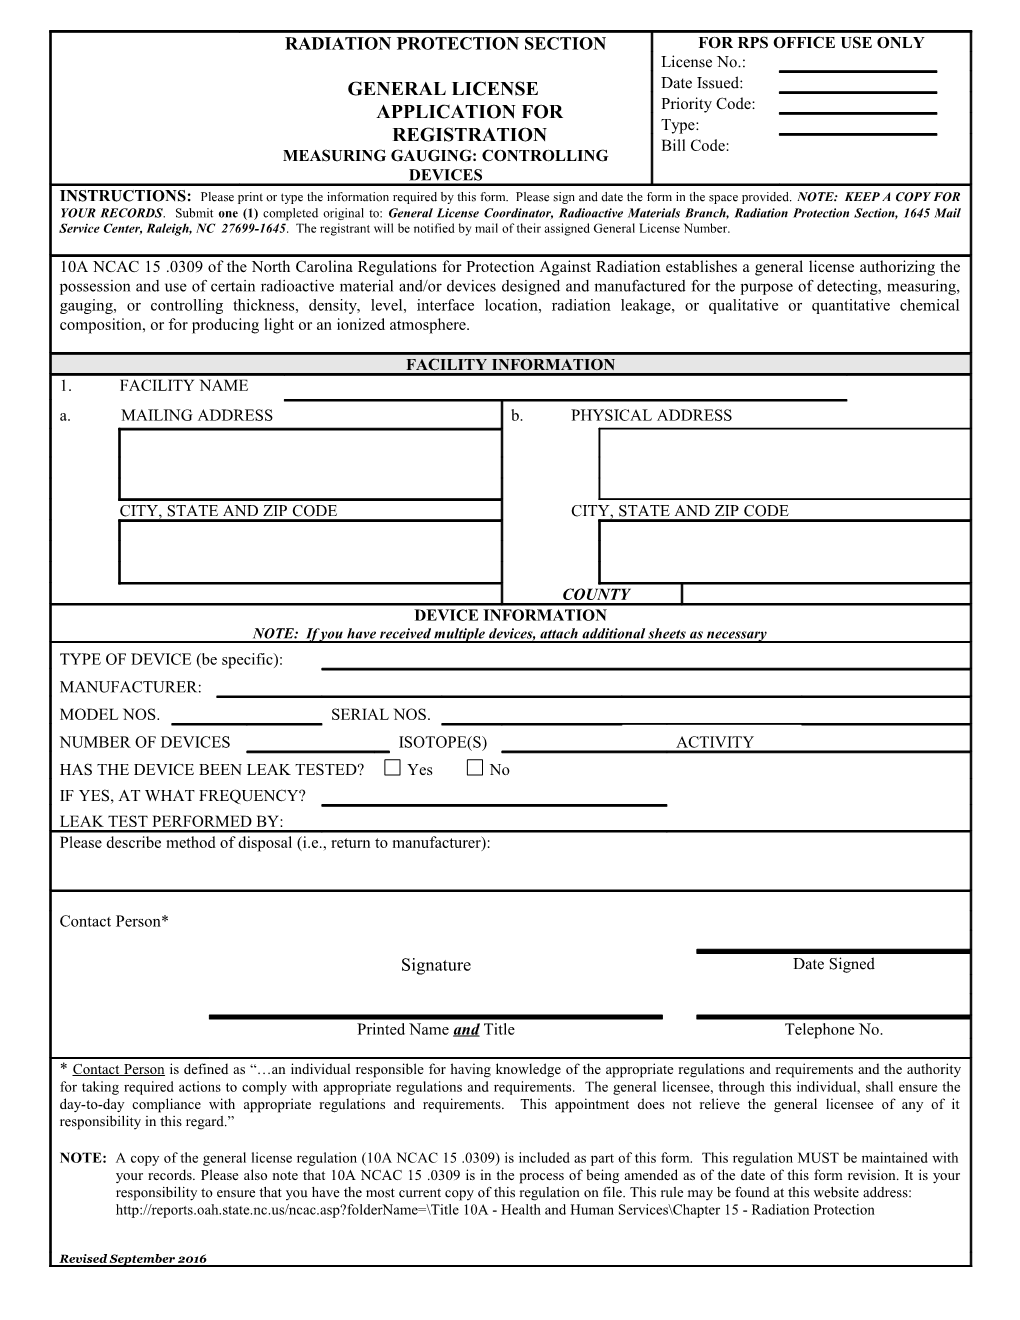 General License Application Form